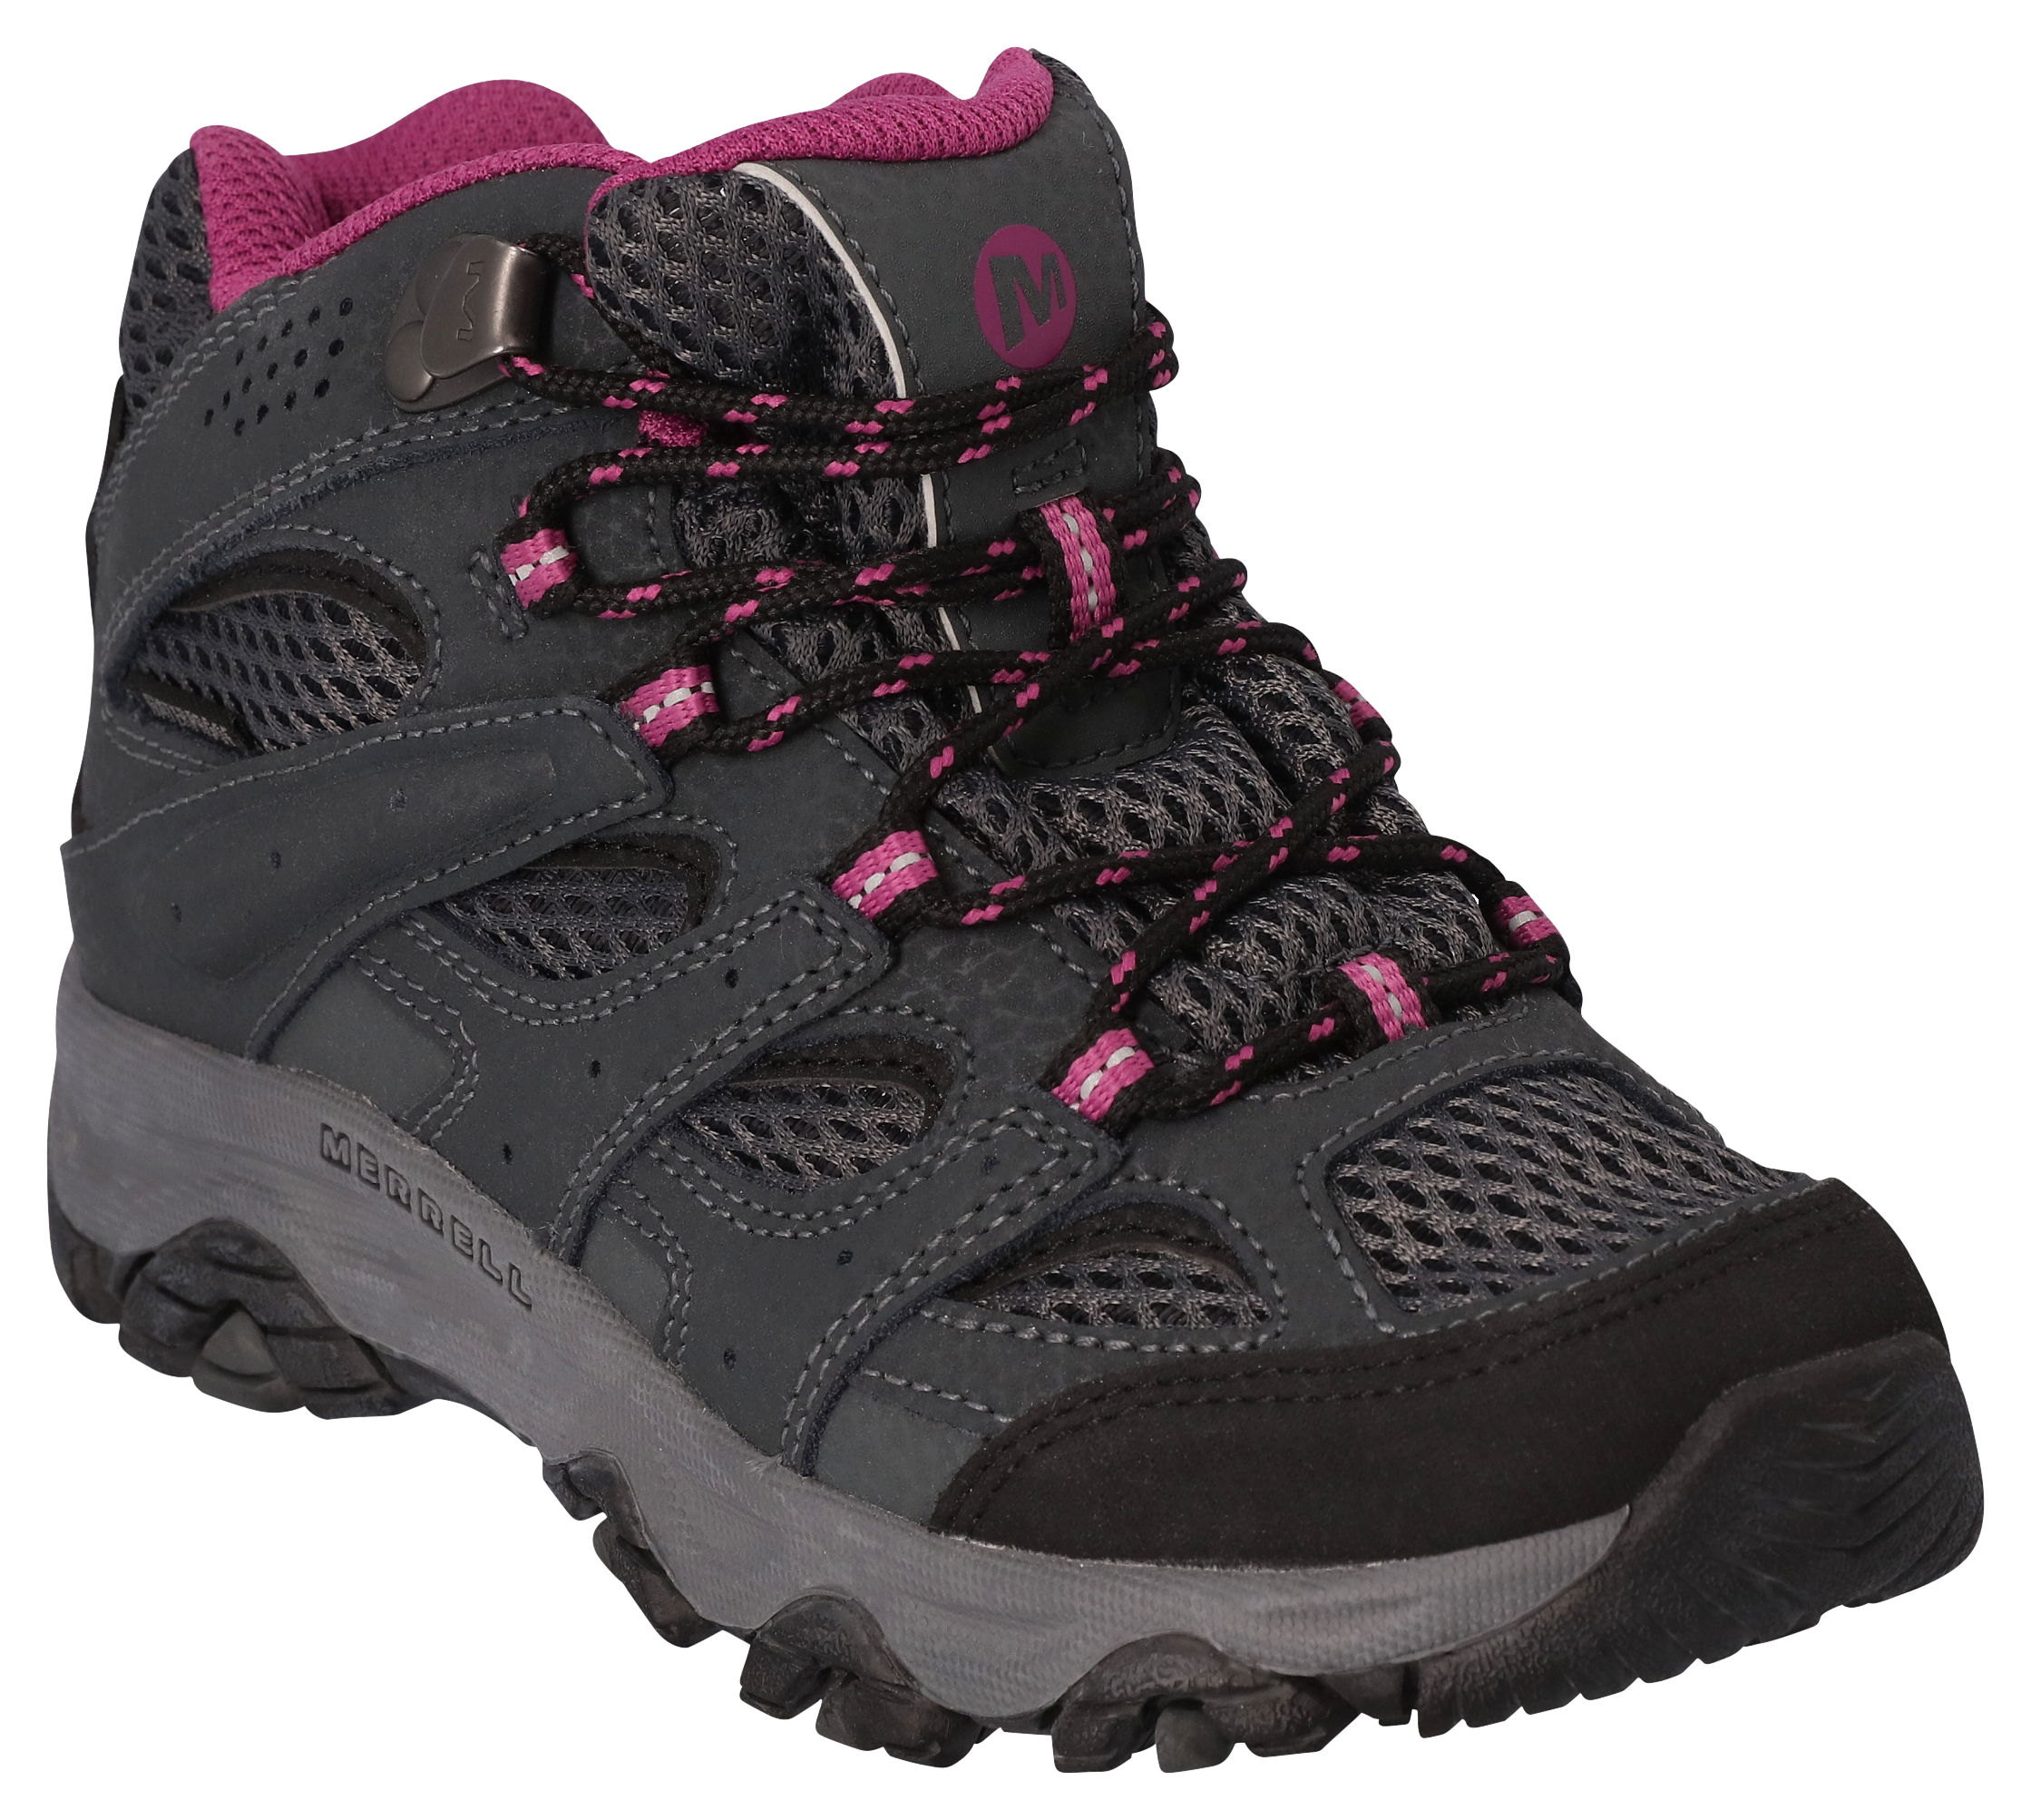 Merrell Moab III Mid Waterproof Hiking Boots for Kids - Granite - 4 Kids